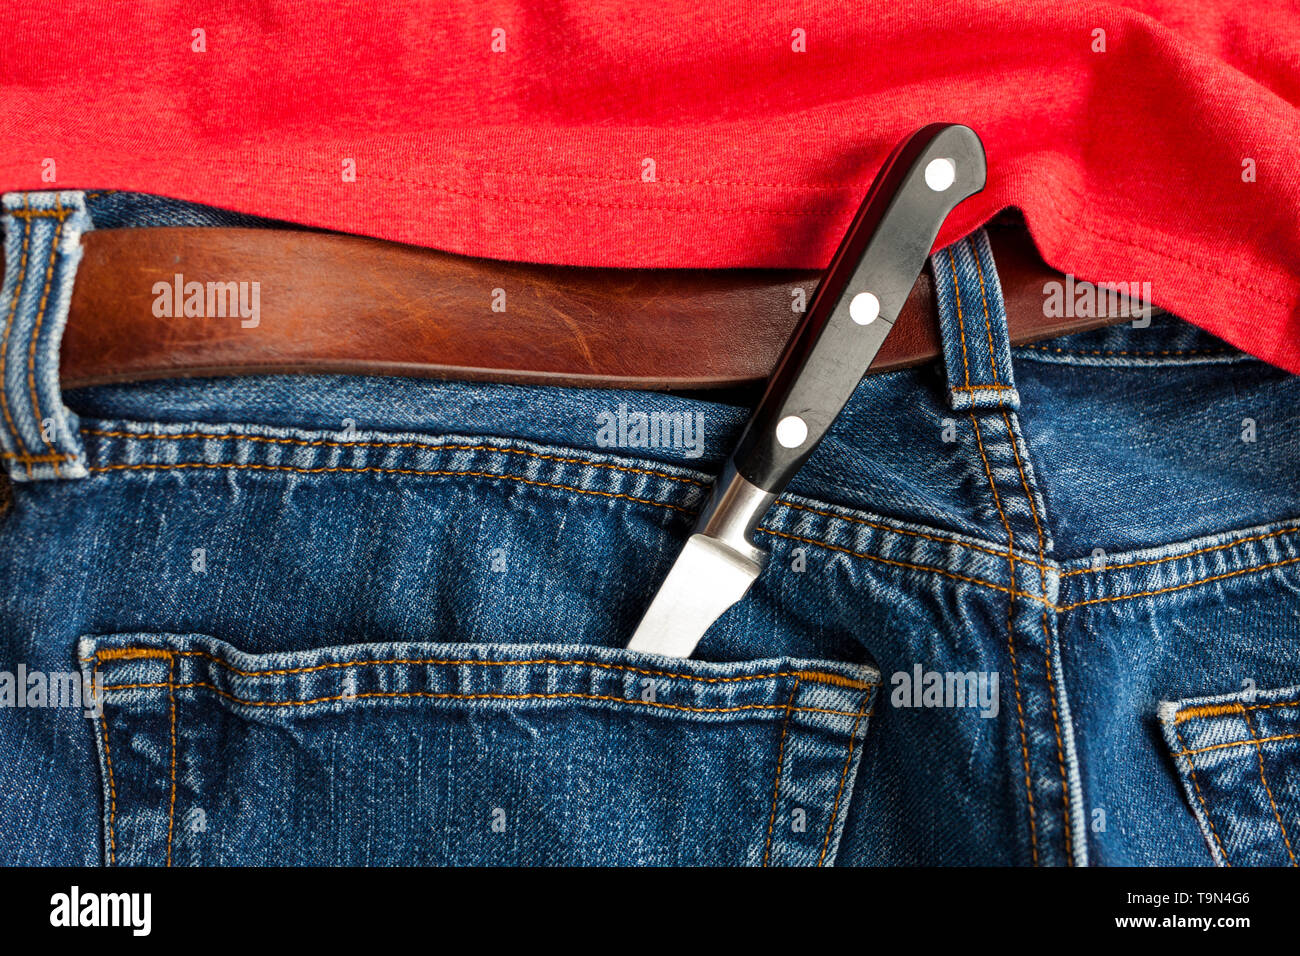 Knife crime. A knife in the back pocket of denim jeans. Stock Photo